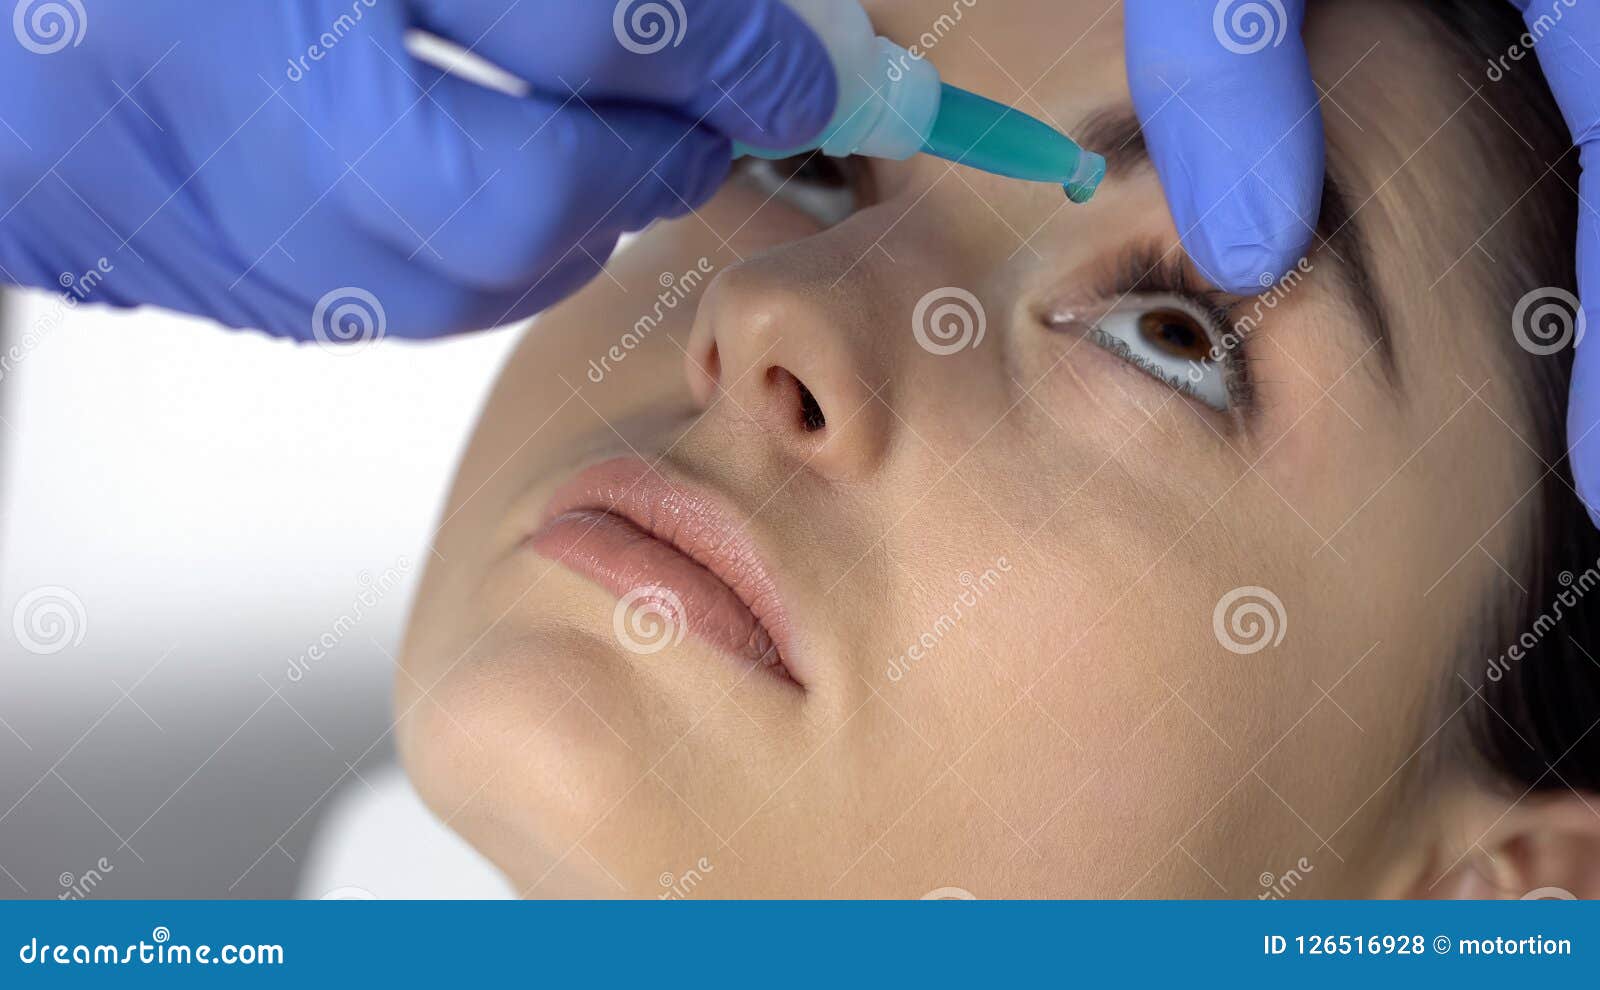 doctor dripping medicine into patient eyes, eyesight checkup, dryness of eyeball